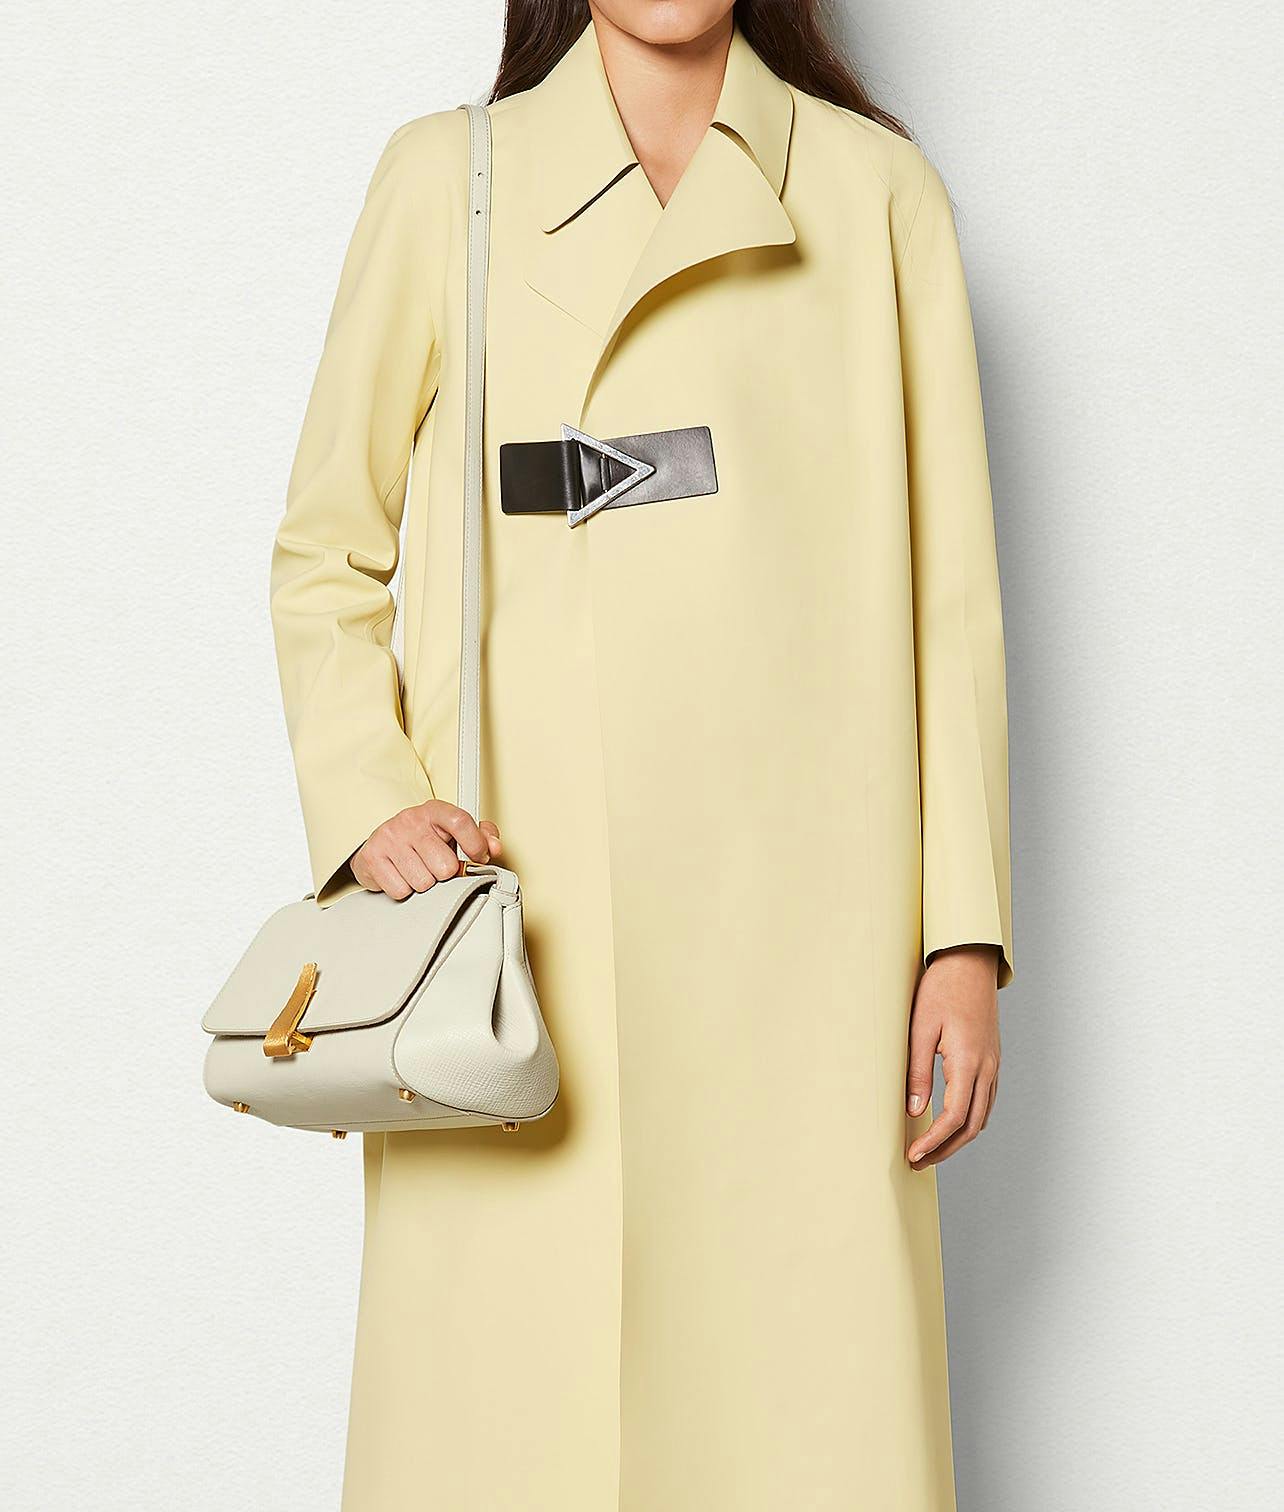 clothing apparel overcoat coat sleeve trench coat shirt long sleeve